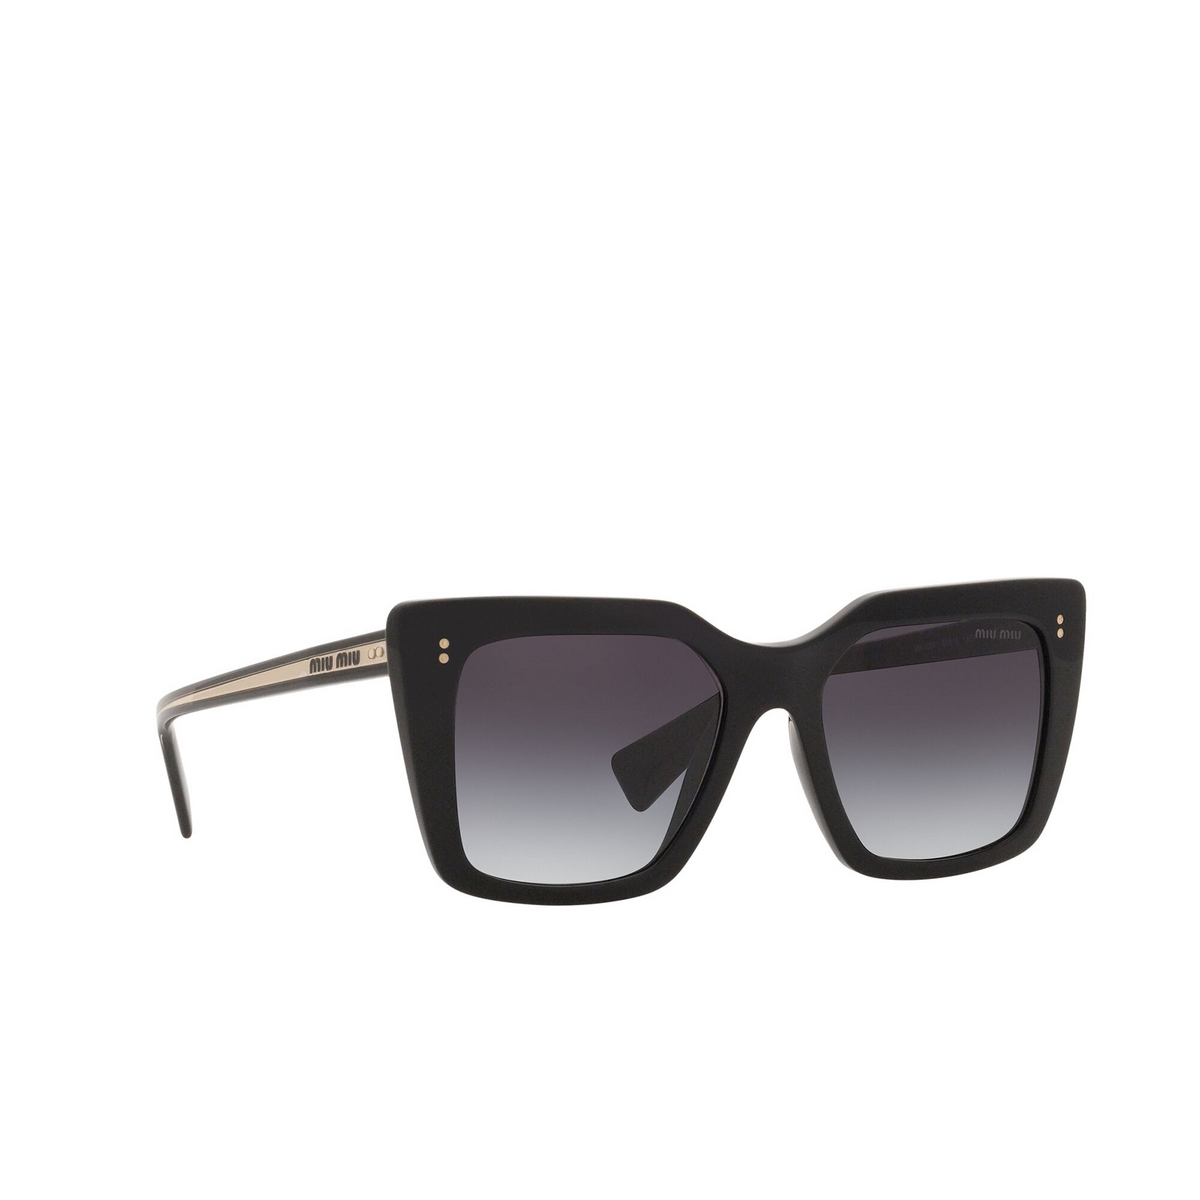 Miu Miu® Square Sunglasses: MU 02WS color Black 1AB5D1 - three-quarters view.